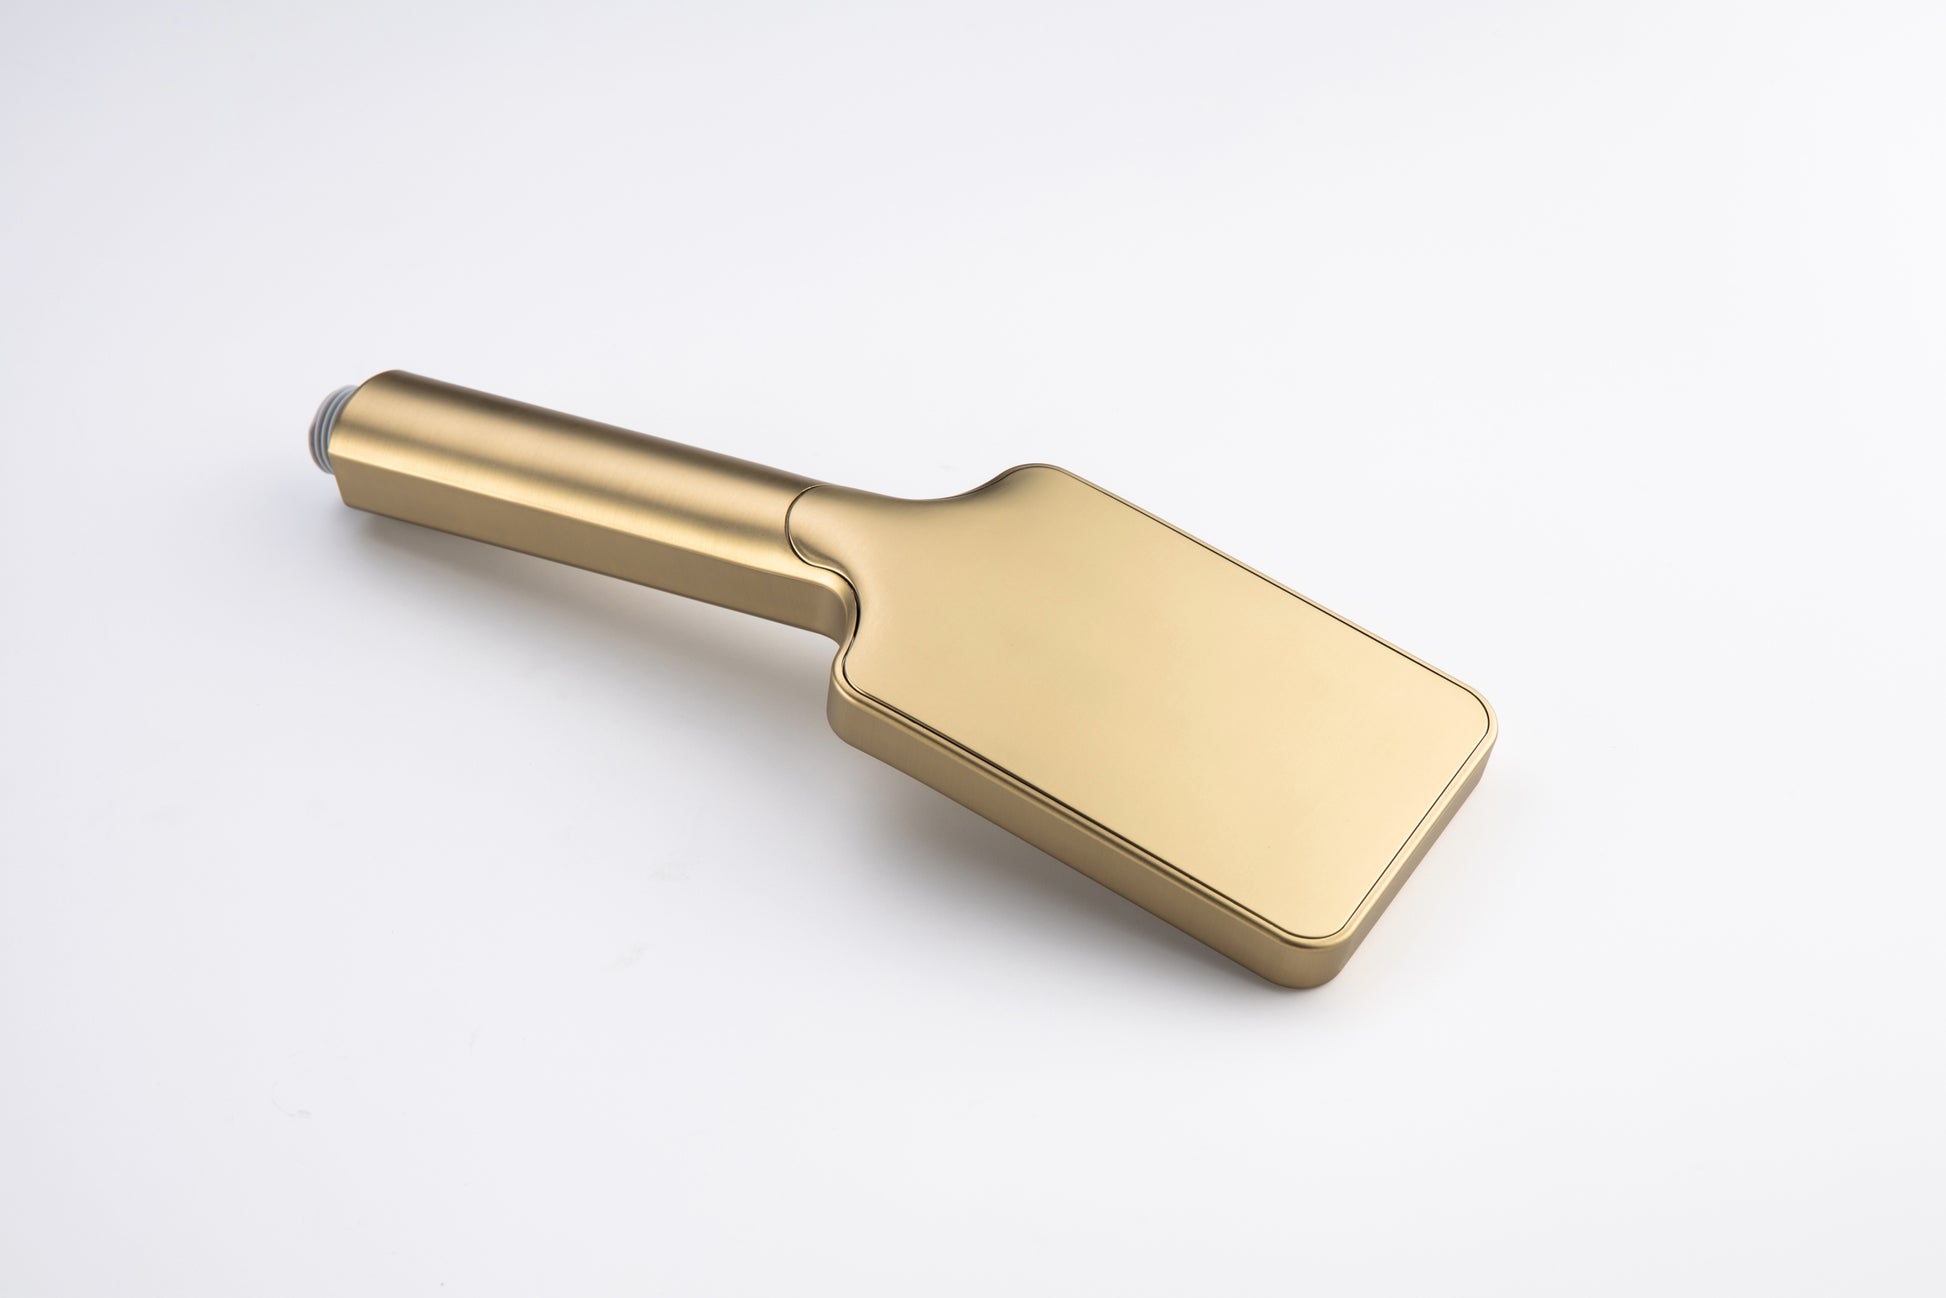 Shower Faucet Set Anti scald Shower Fixtures with golden-brass